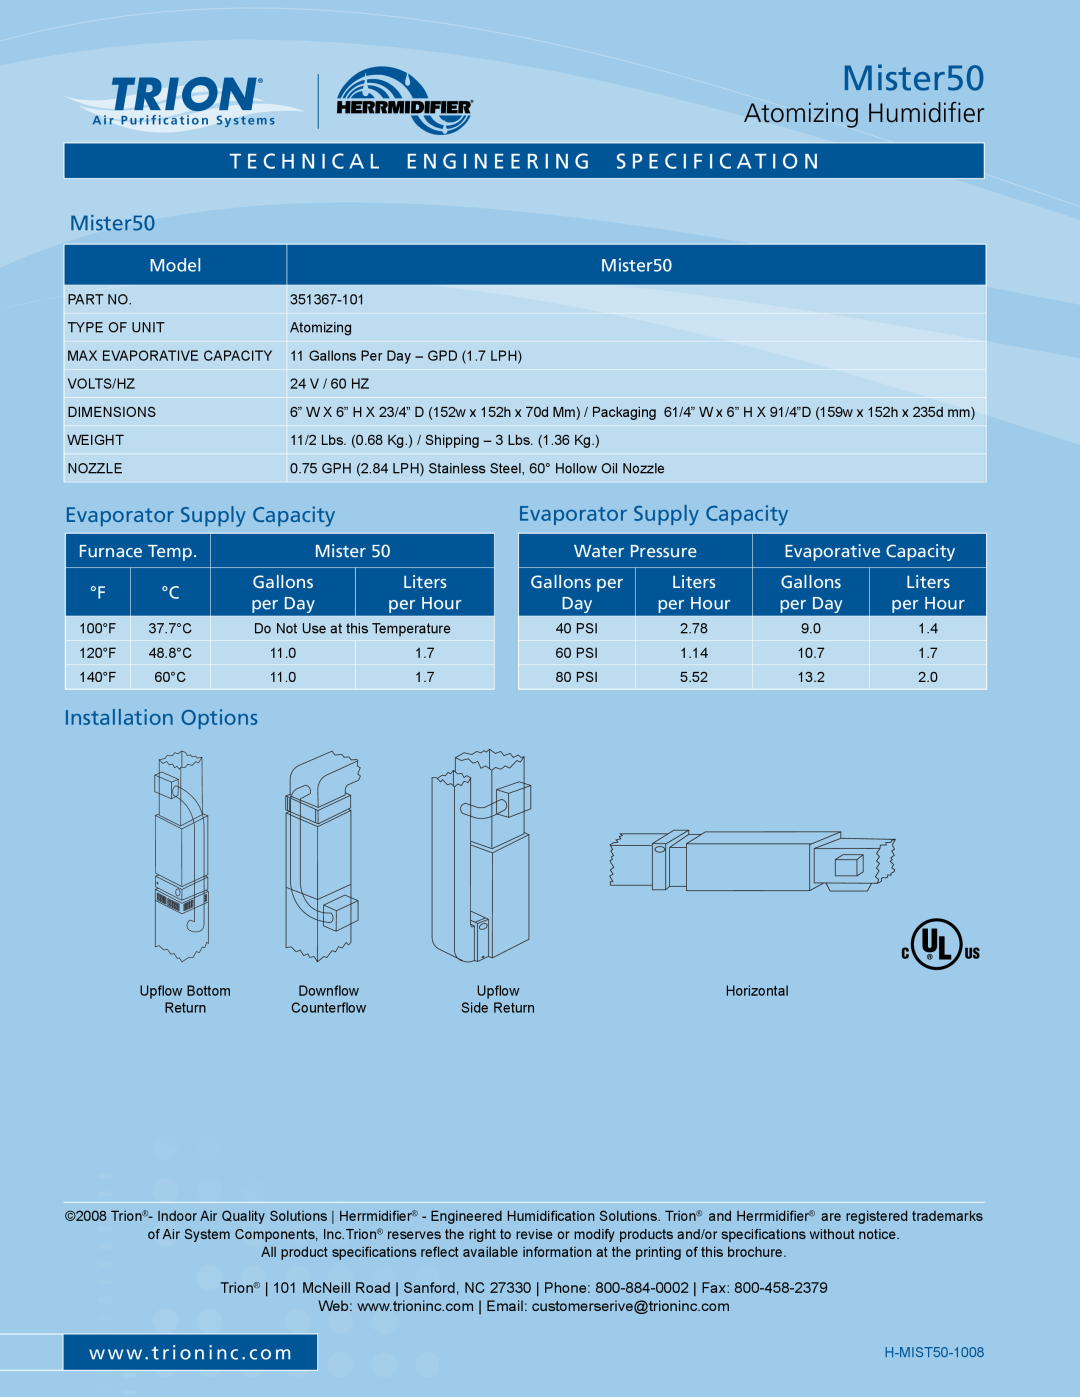 Trion Mister50, Evaporator Supply Capacity, Installation Options, Atomizing Humidifier, w w w. t r i o n i n c . c o m 